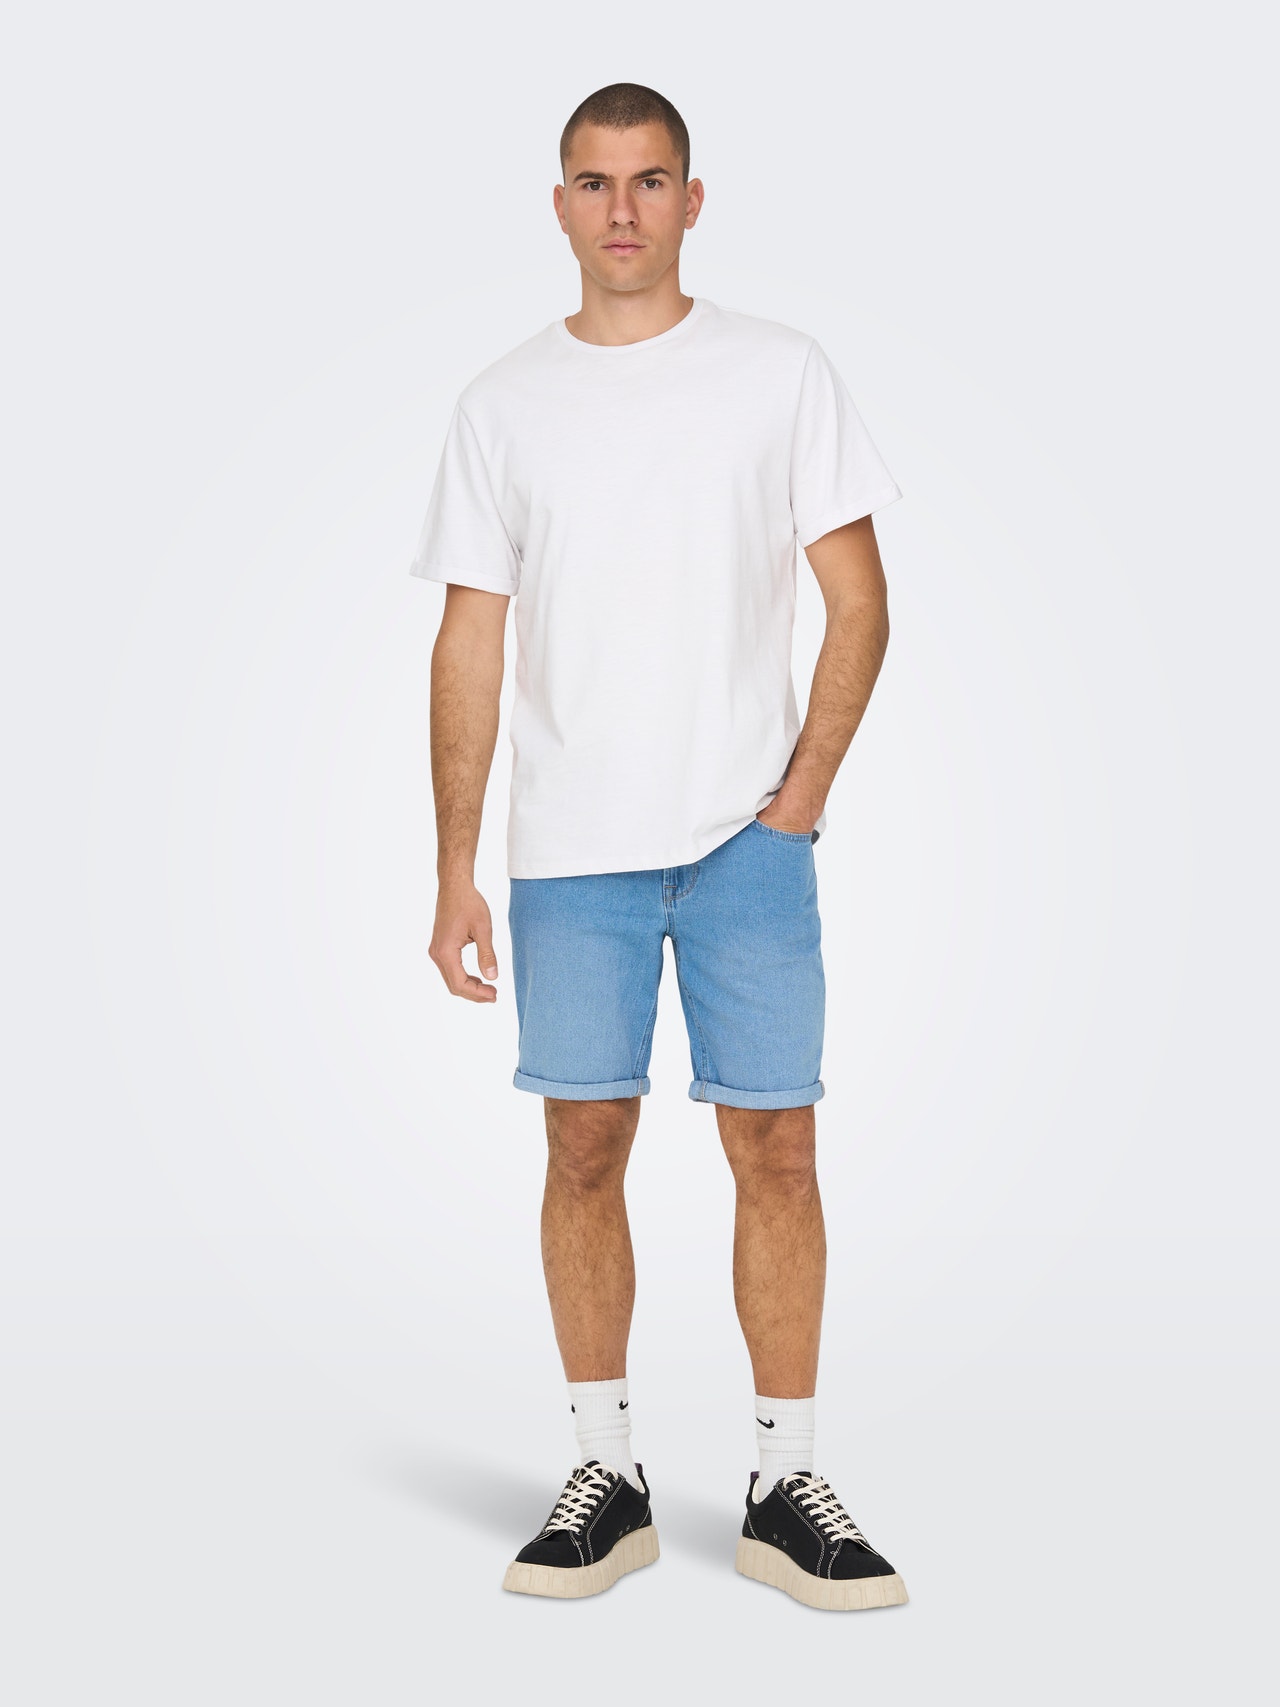 ONLY & SONS Normal passform Normal midja Shorts -Light Blue Denim - 22026249